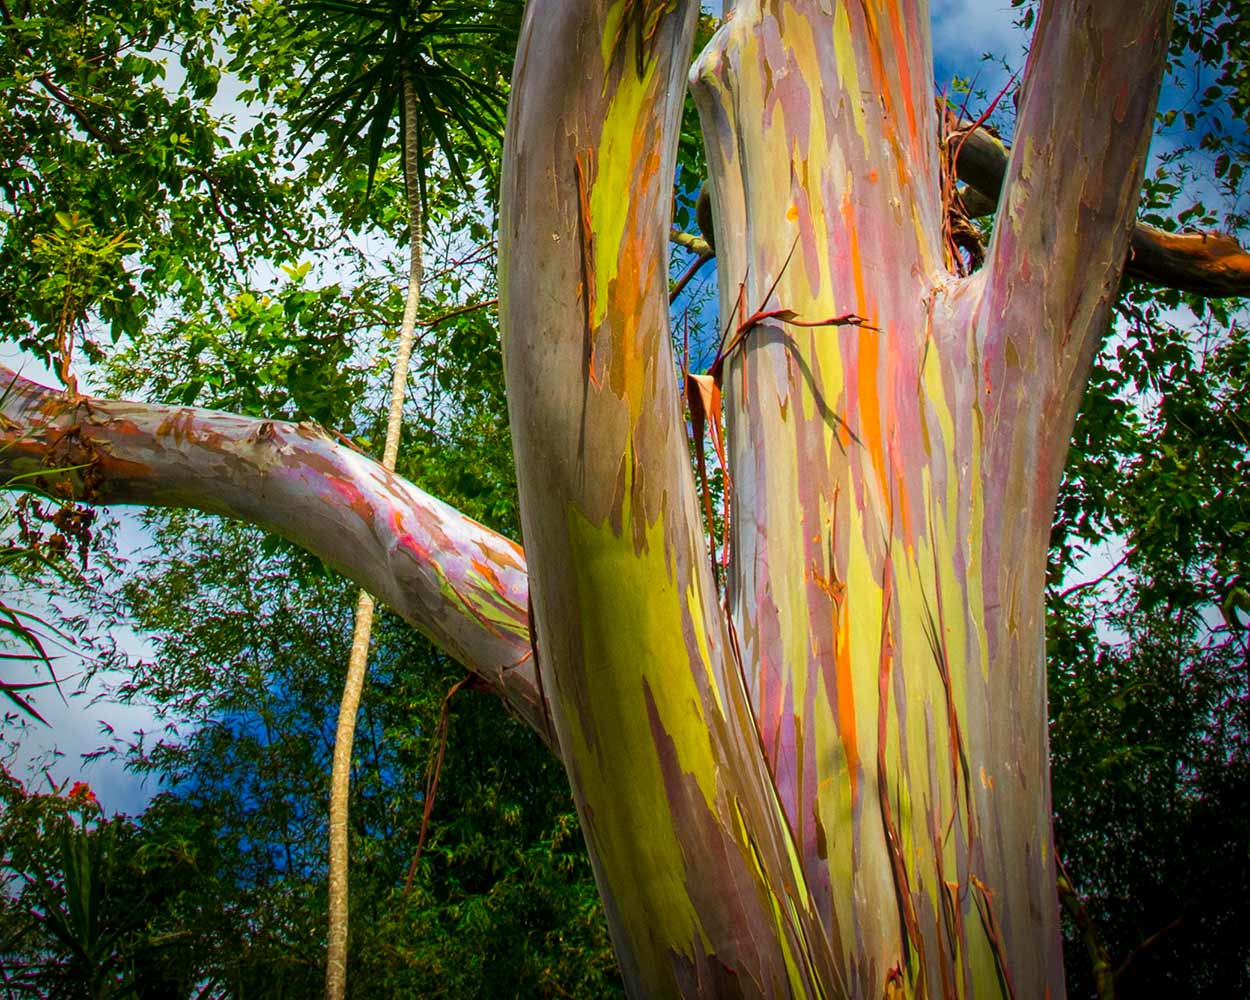 Tree with colourful stripy bark